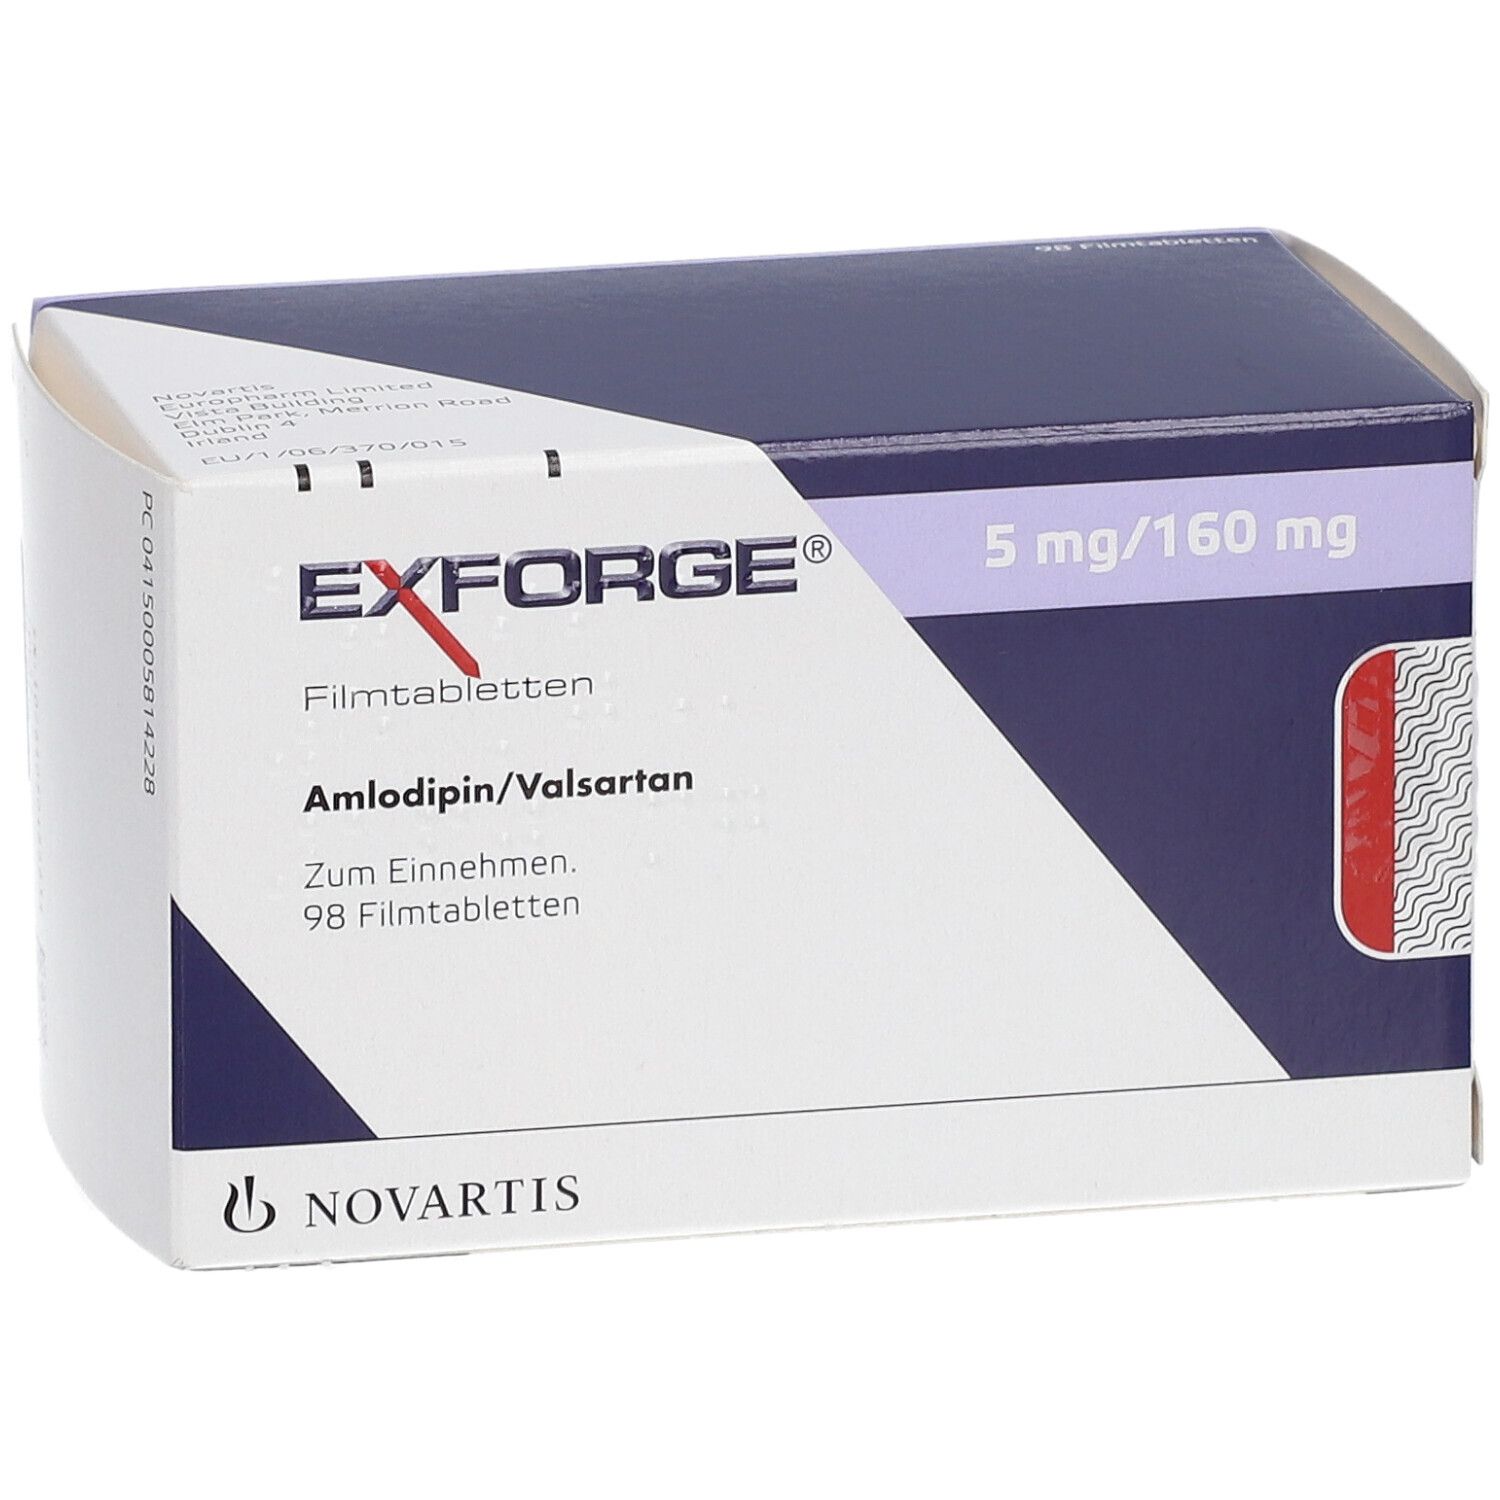 Exforge® 5 mg/160 mg